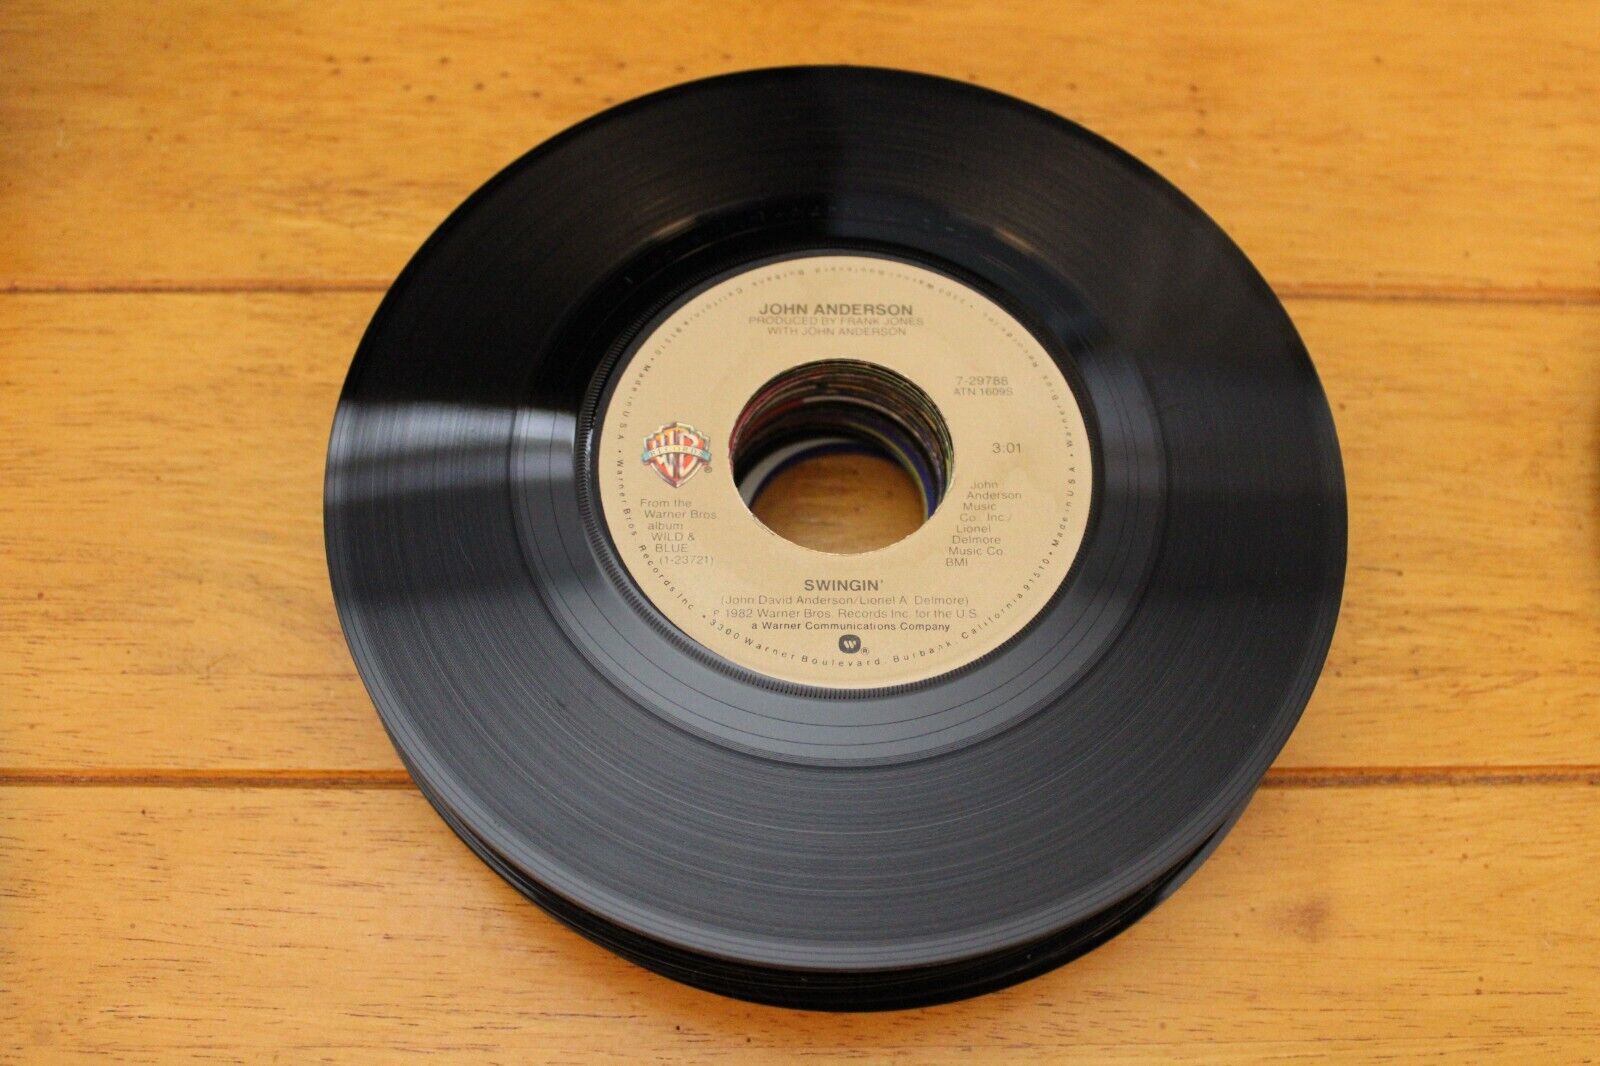 JOHN ANDERSON "A HONKY TONK SATURDAY NIGHT" 45 RPM 7" RECORD [CC4-117]